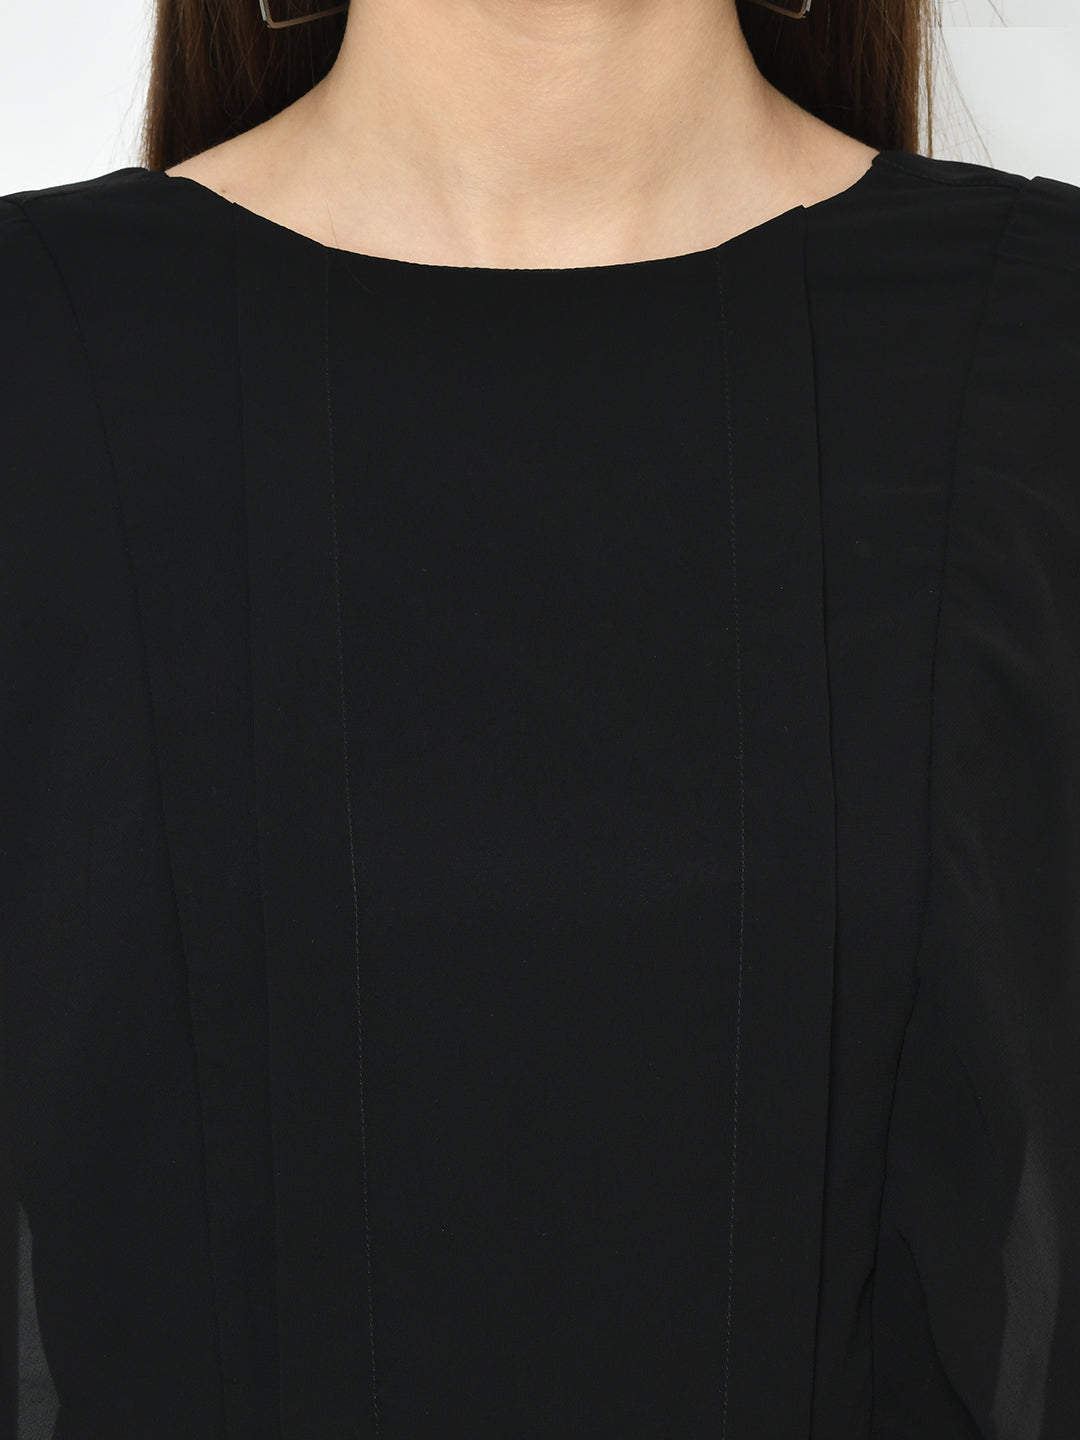 Black Half Sleeves 2 Fir 1 With Shimmer Dress